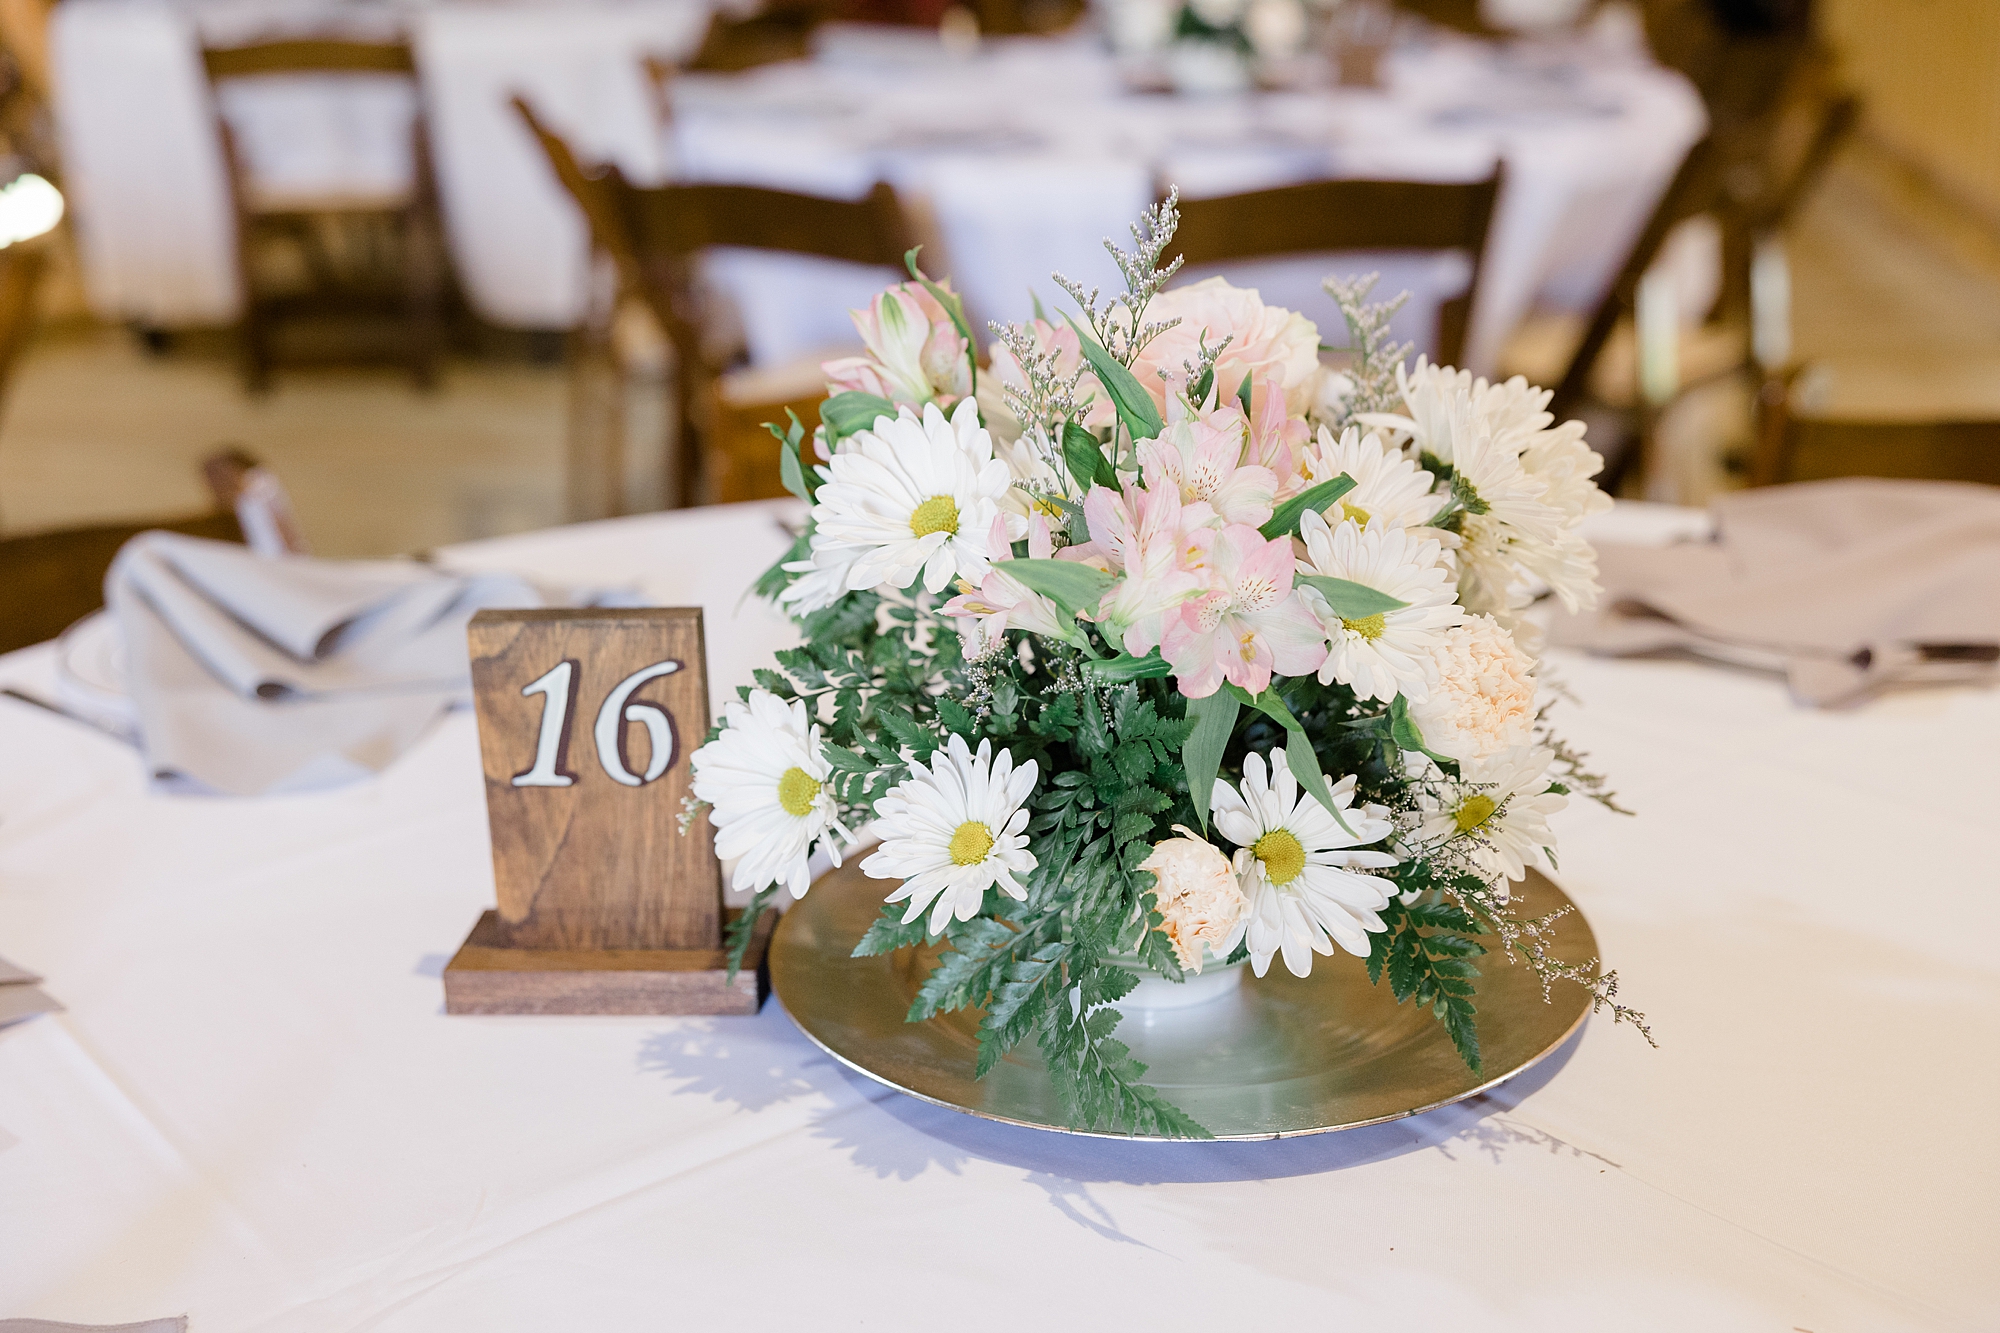 daisy centerpieces for rustic New York wedding reception